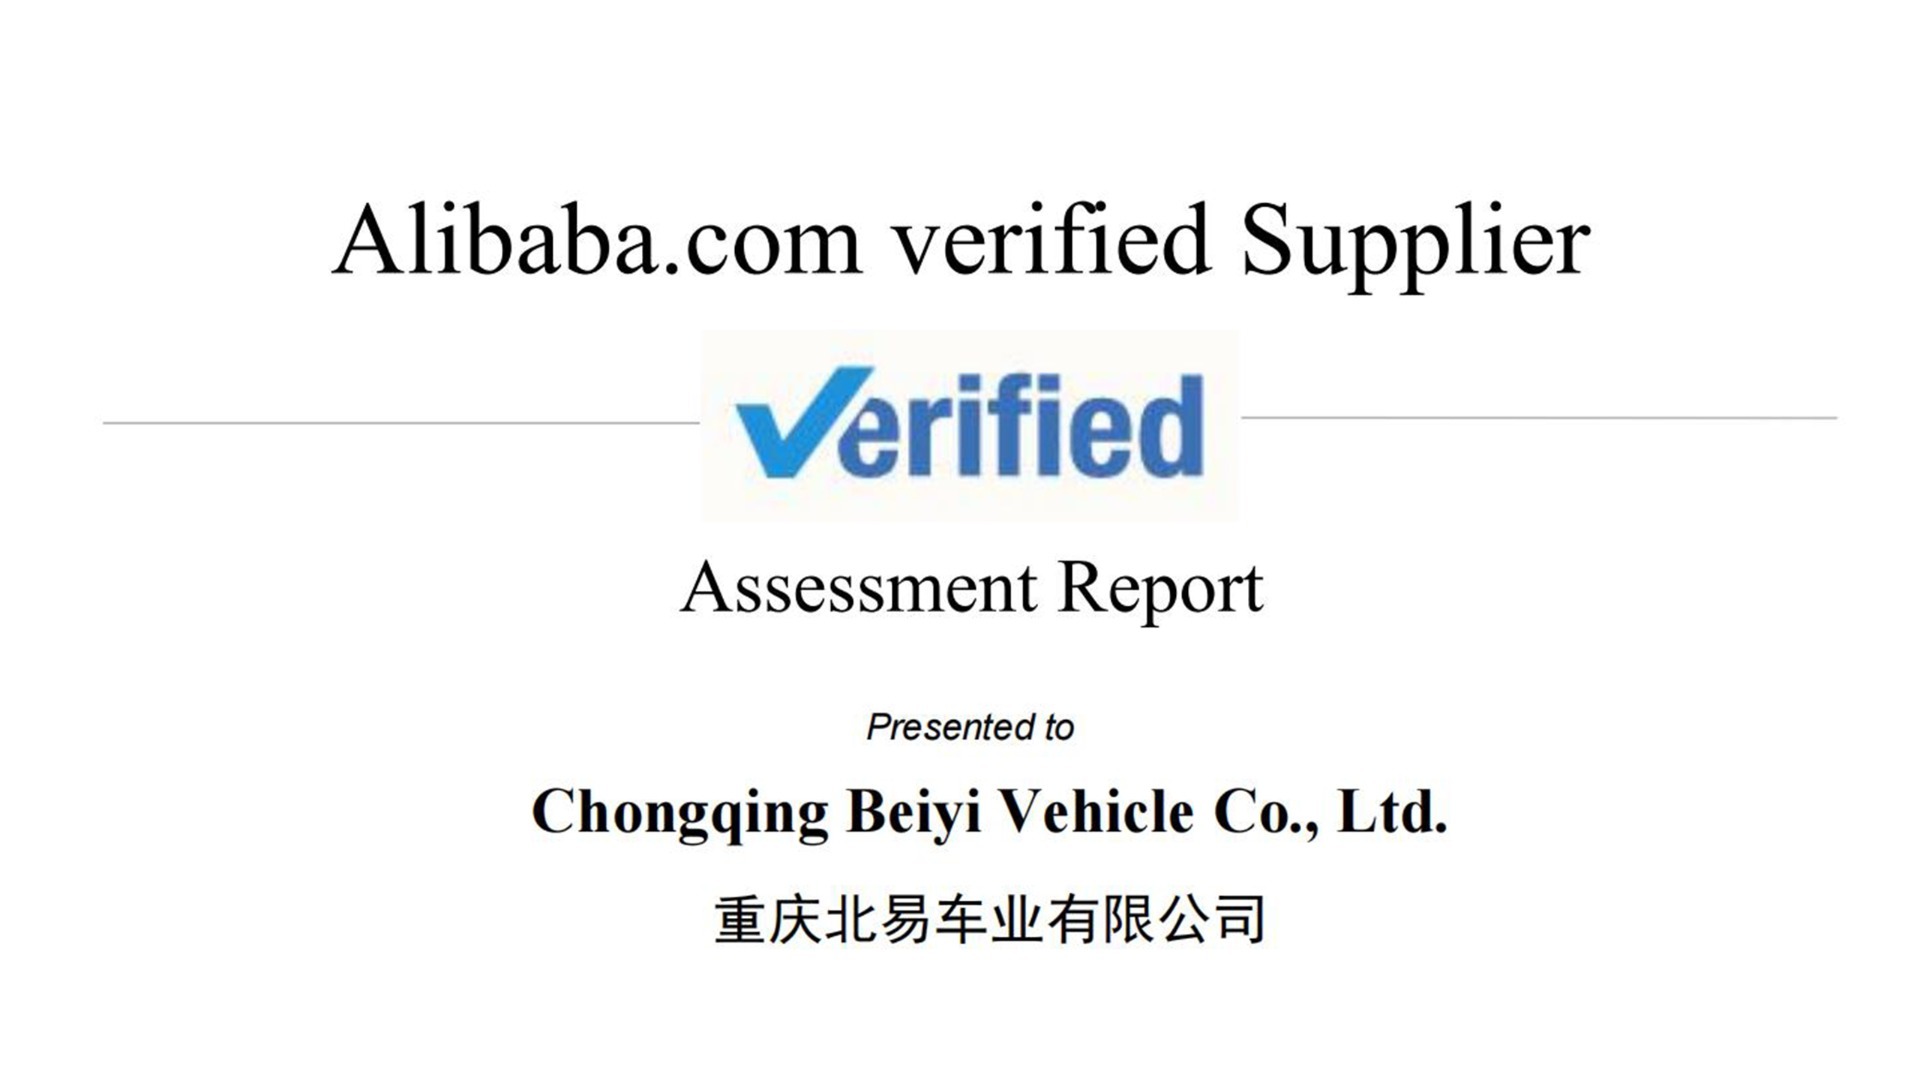 Alibaba certified supplier